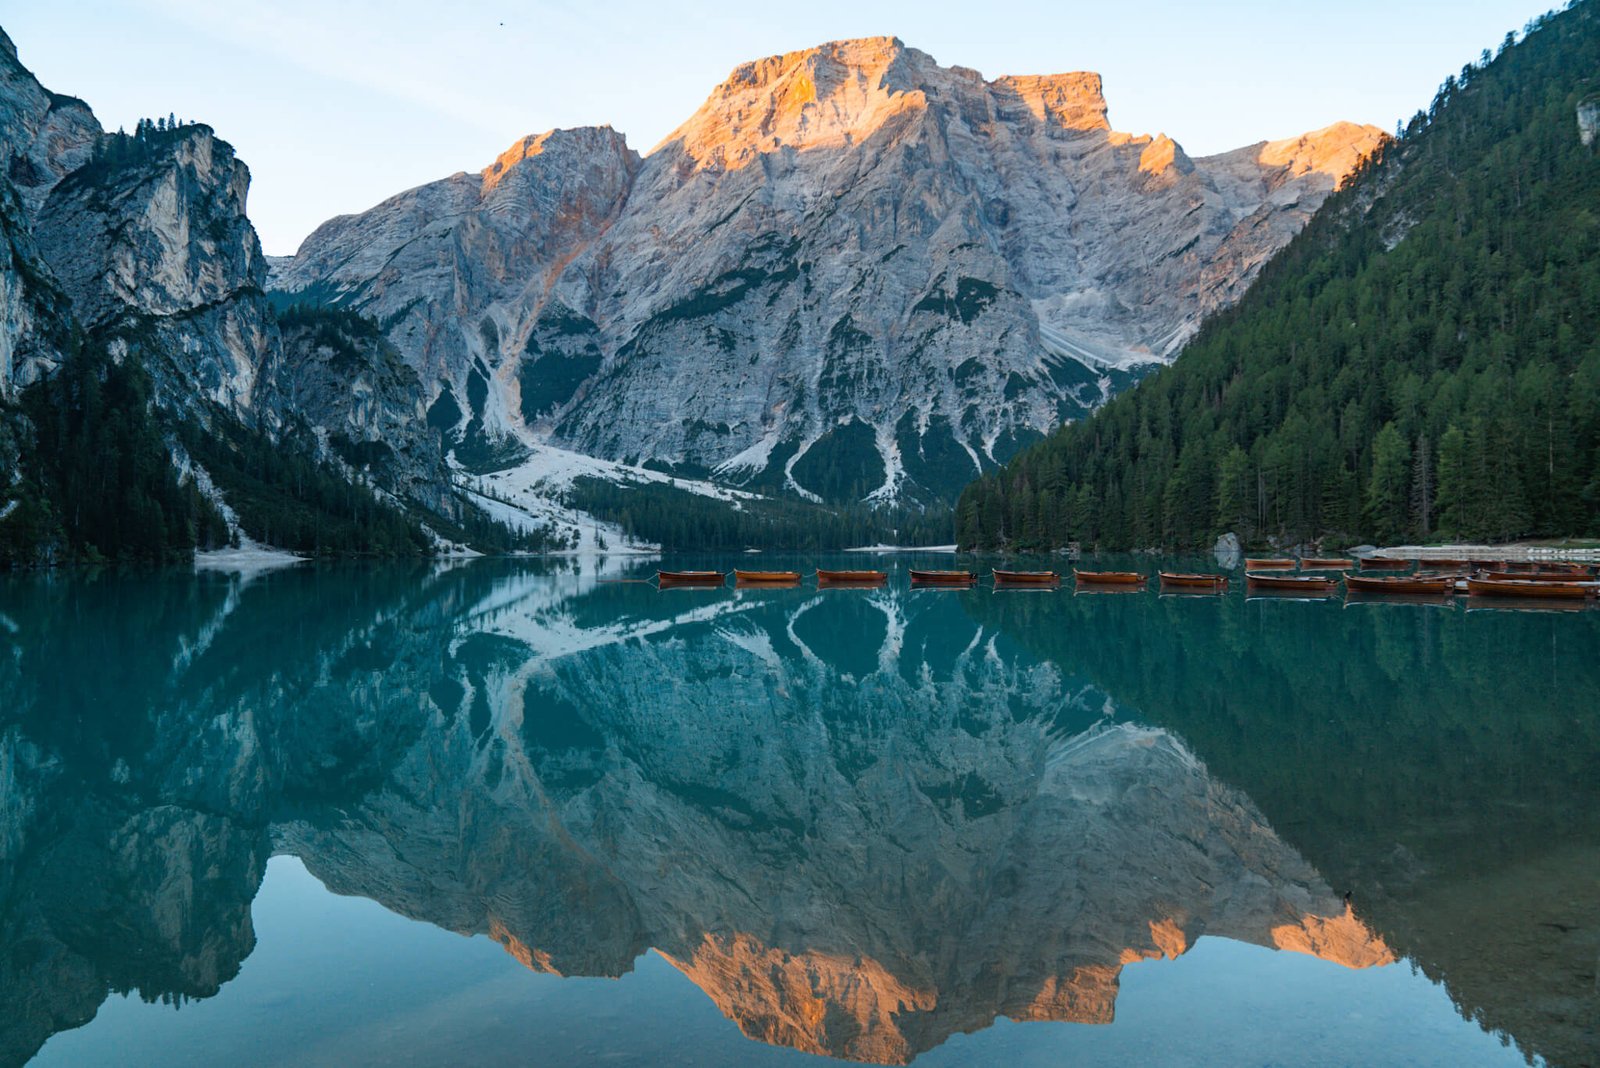 Lago di Braies, the Dolomites in Italy